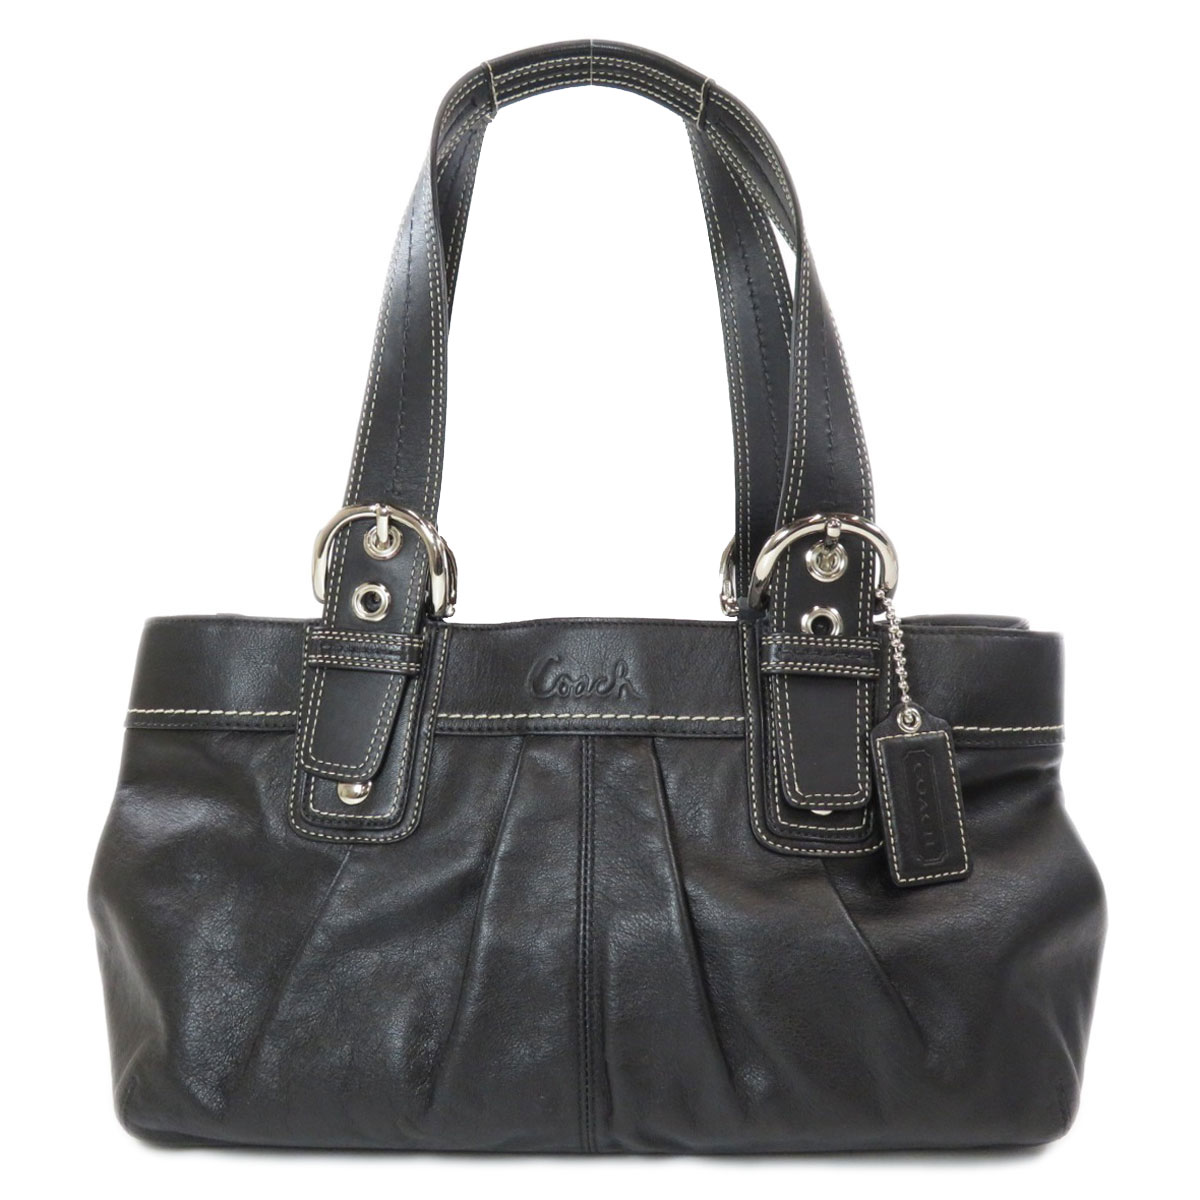 COACH F13732 Tote Bag Soho pleated logo Leather | eBay